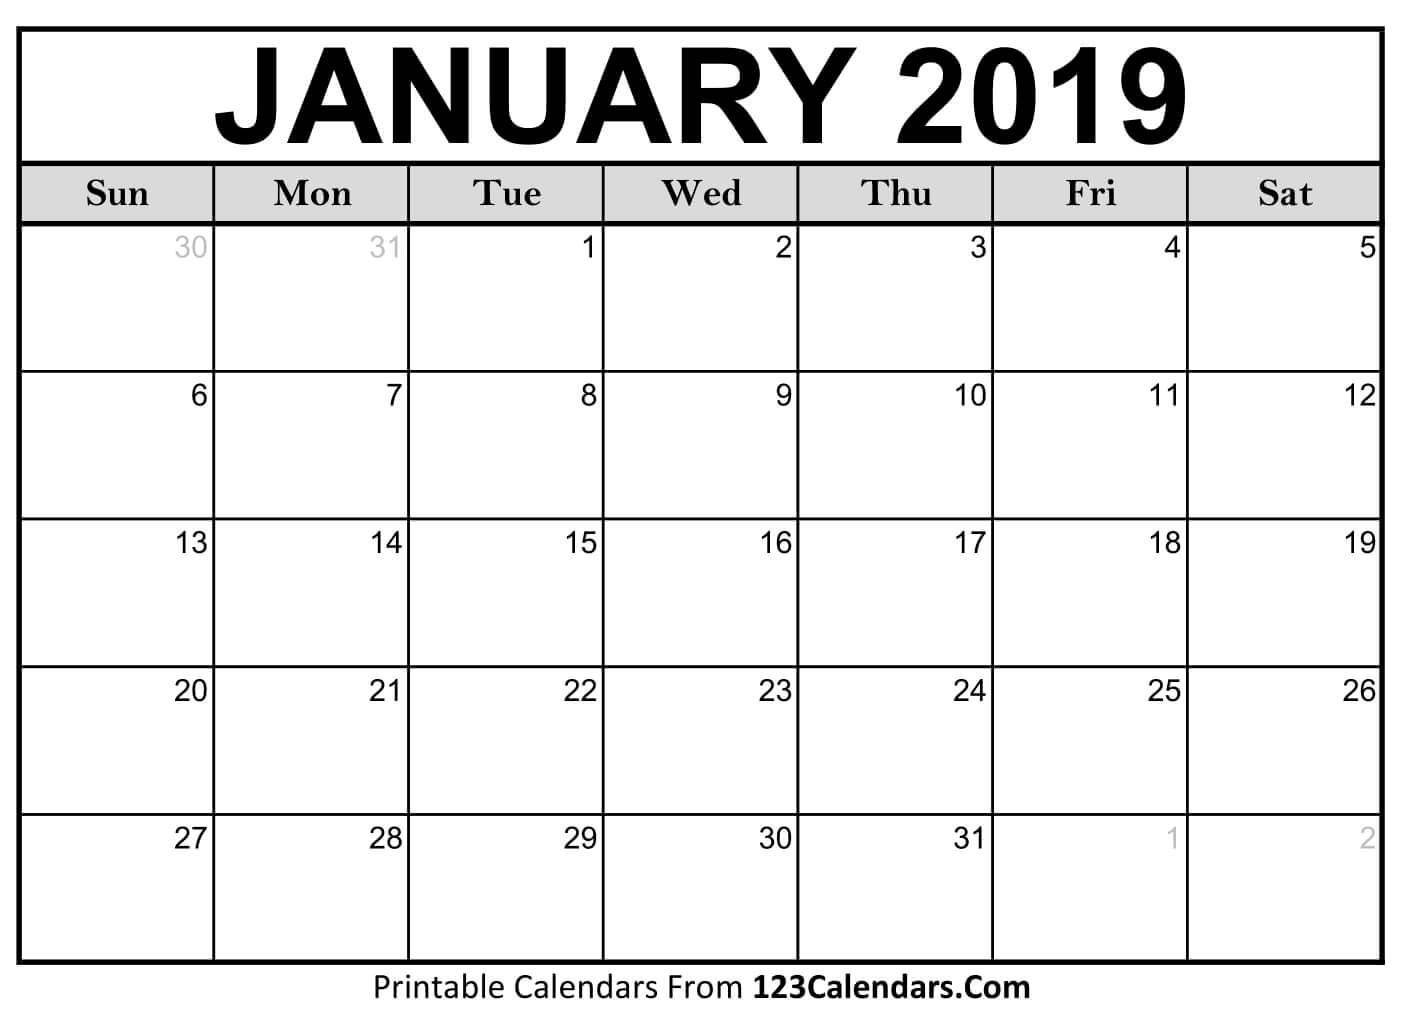 January 2019 Calendar To Print